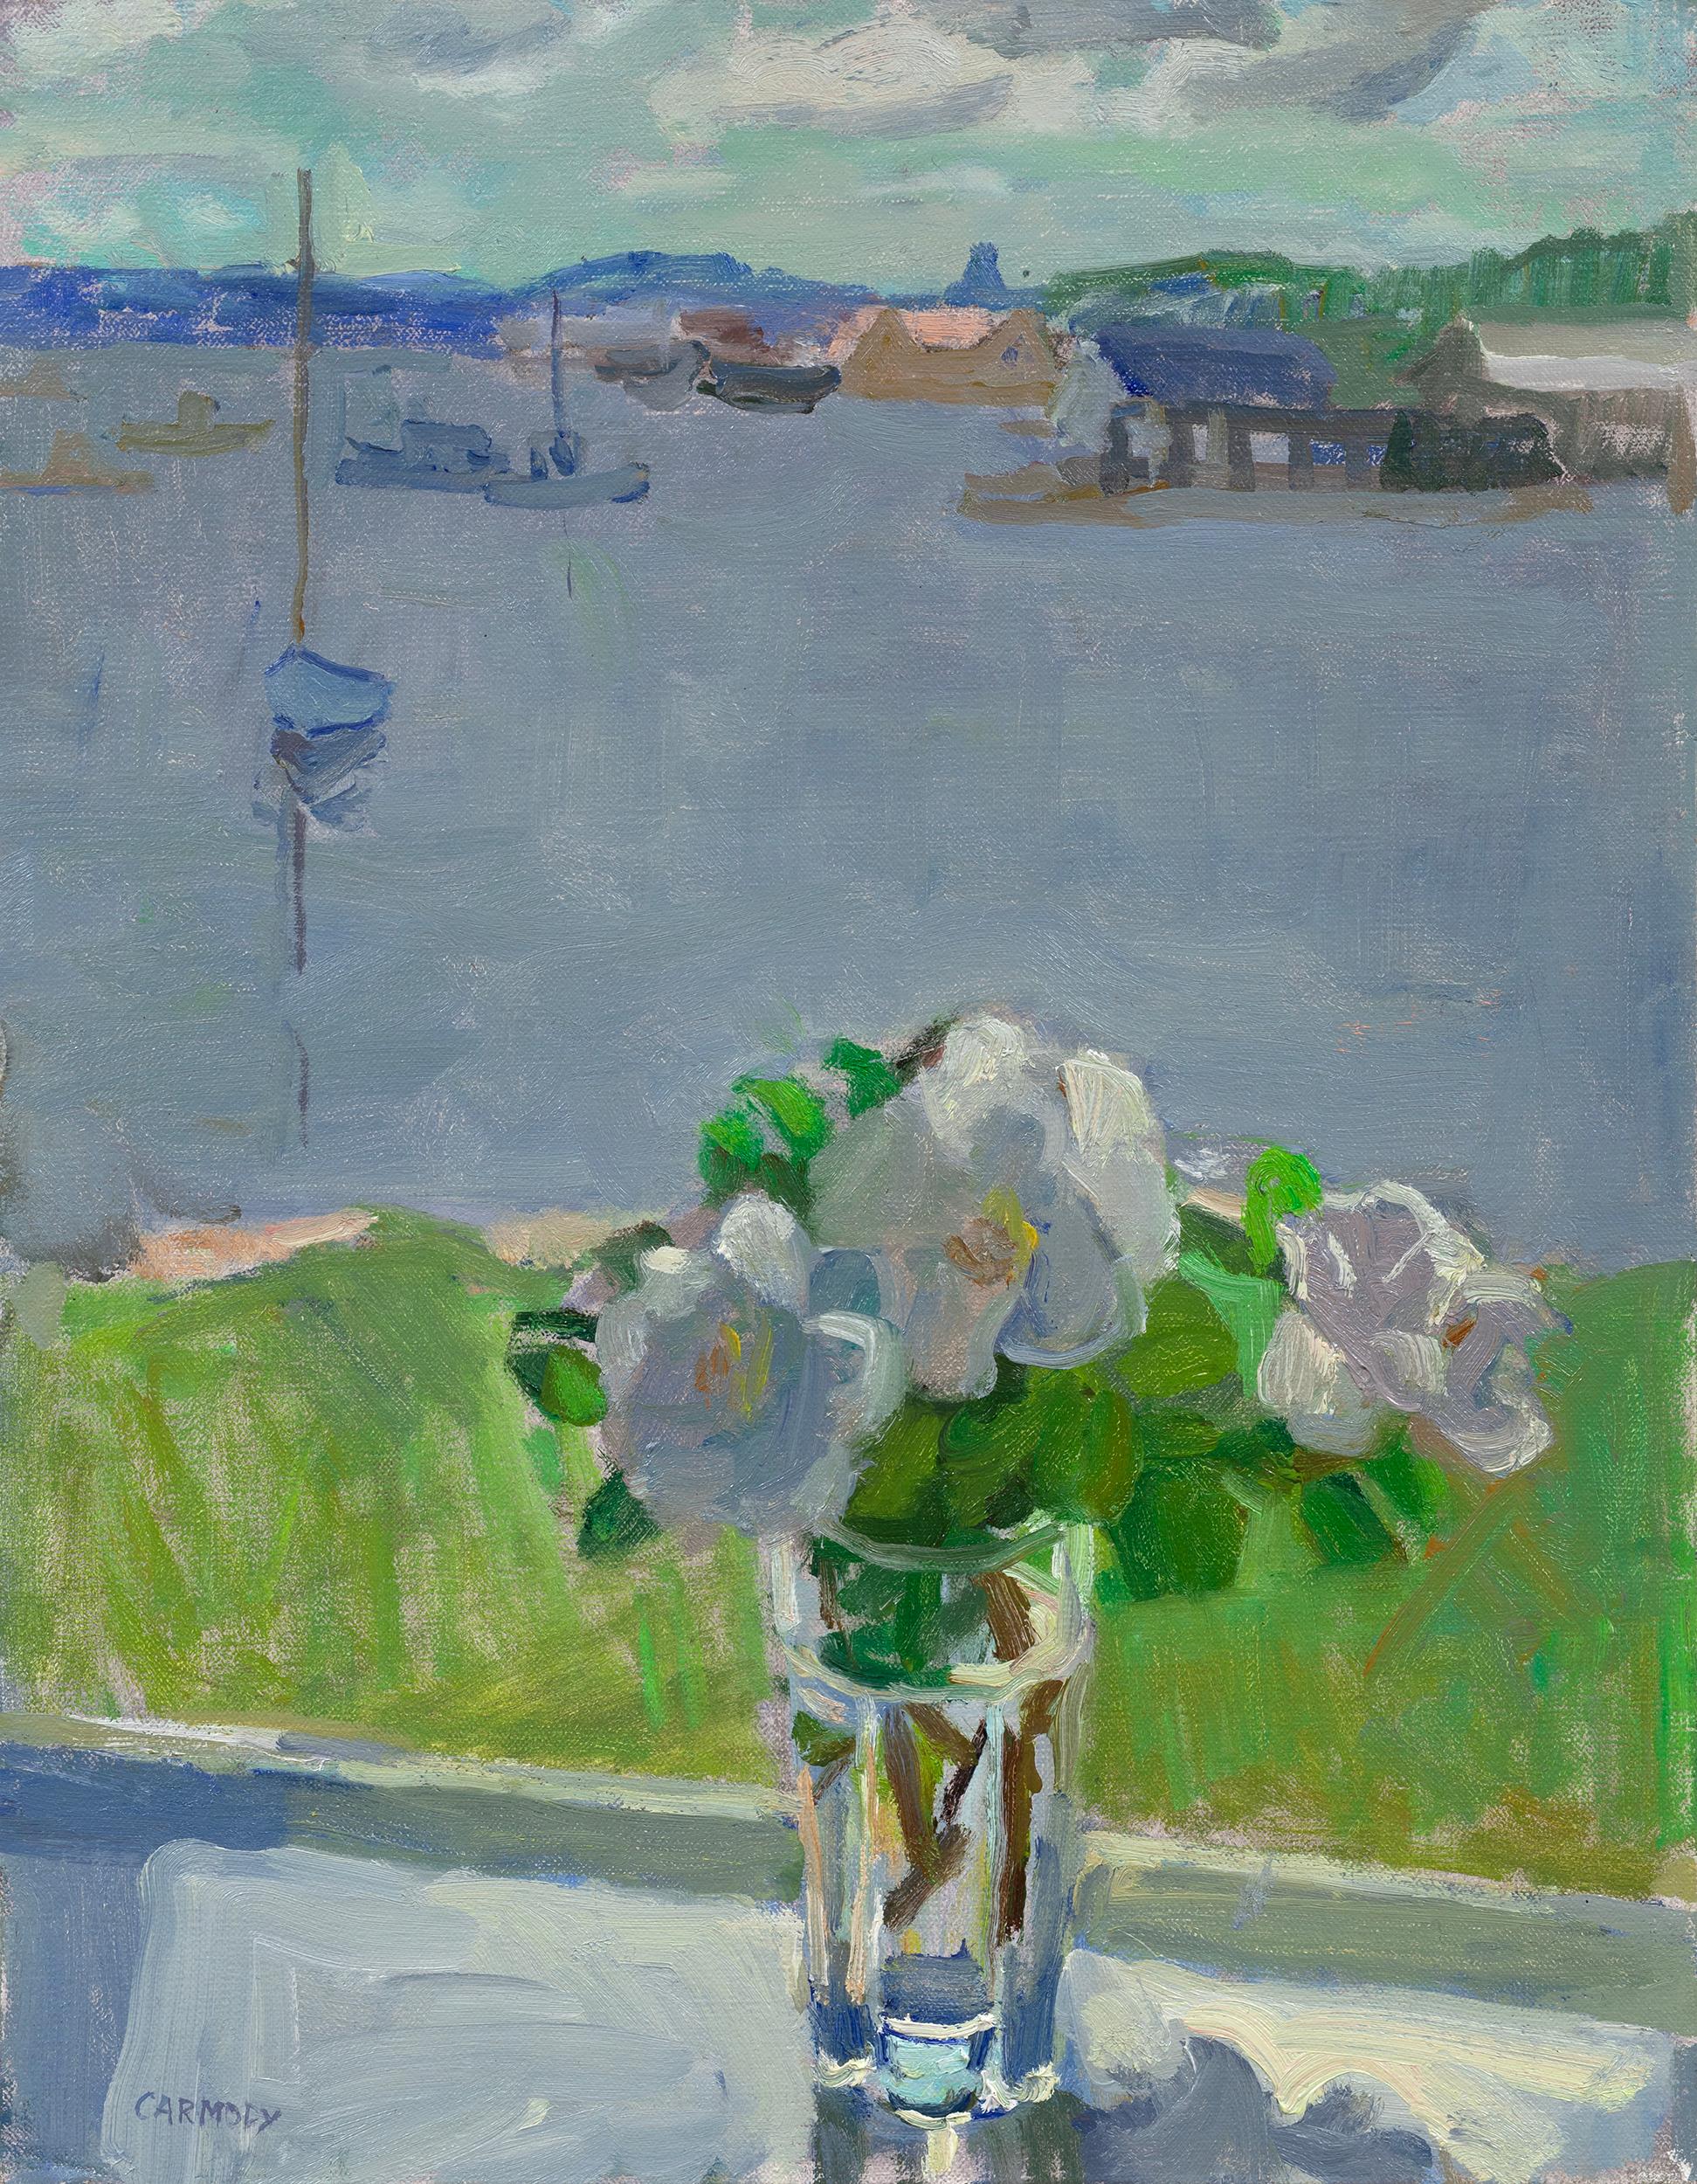 Kelly Carmody Still-Life Painting - "Beach Roses and the Harbor" contemporary still life with harbor and boats